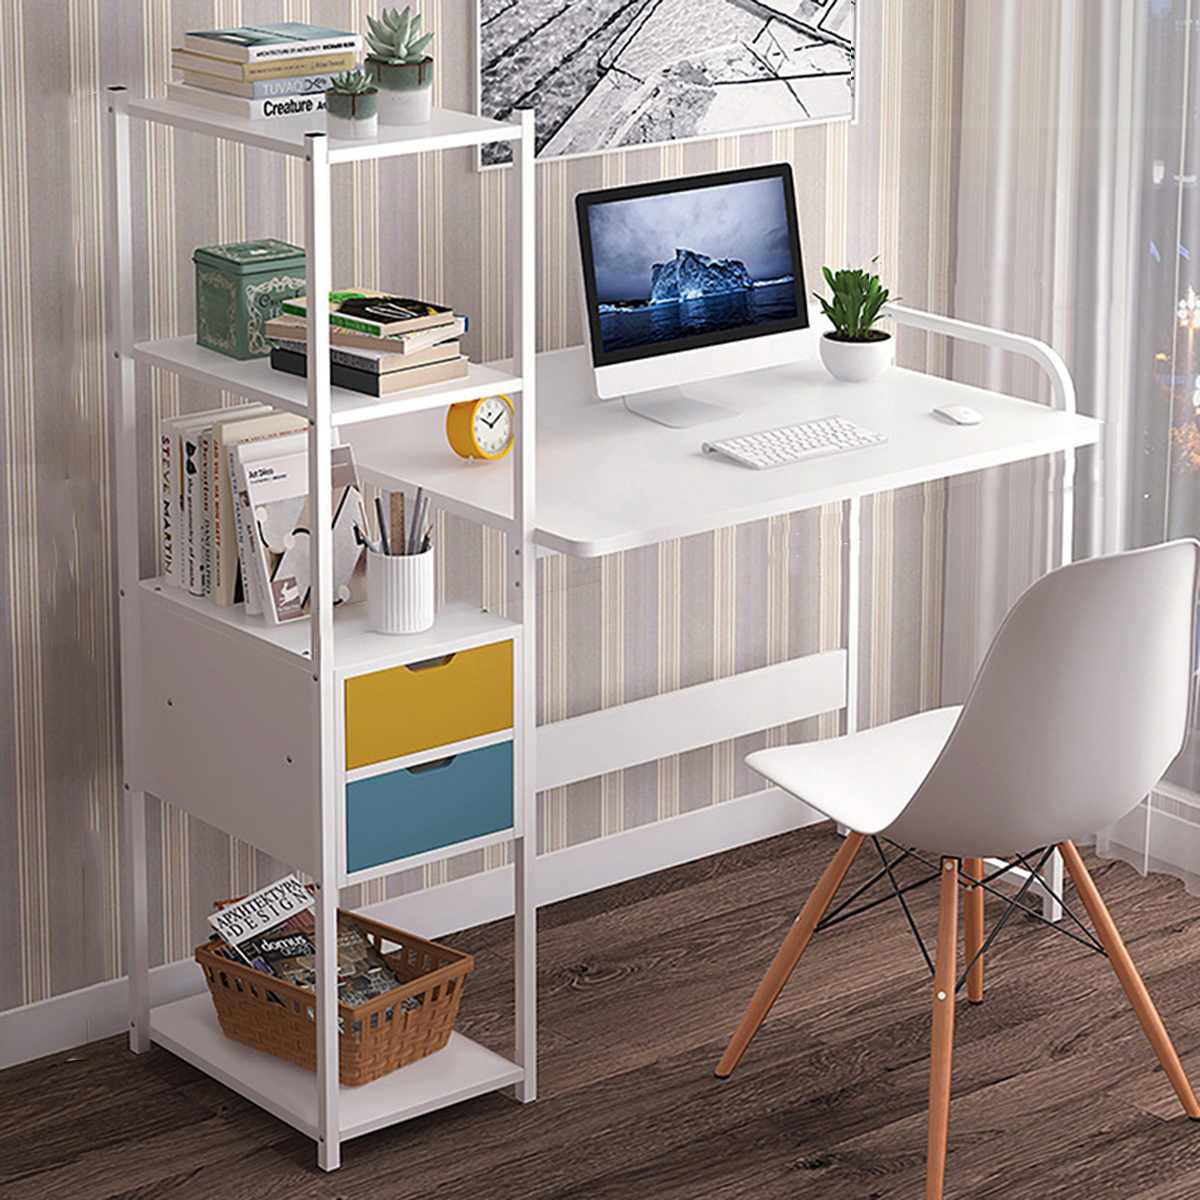 Large Wood Computer Desk Laptop Desk Writing Table Study Desk with Drawers Shelves Office Furniture PC Laptop Workstation Home